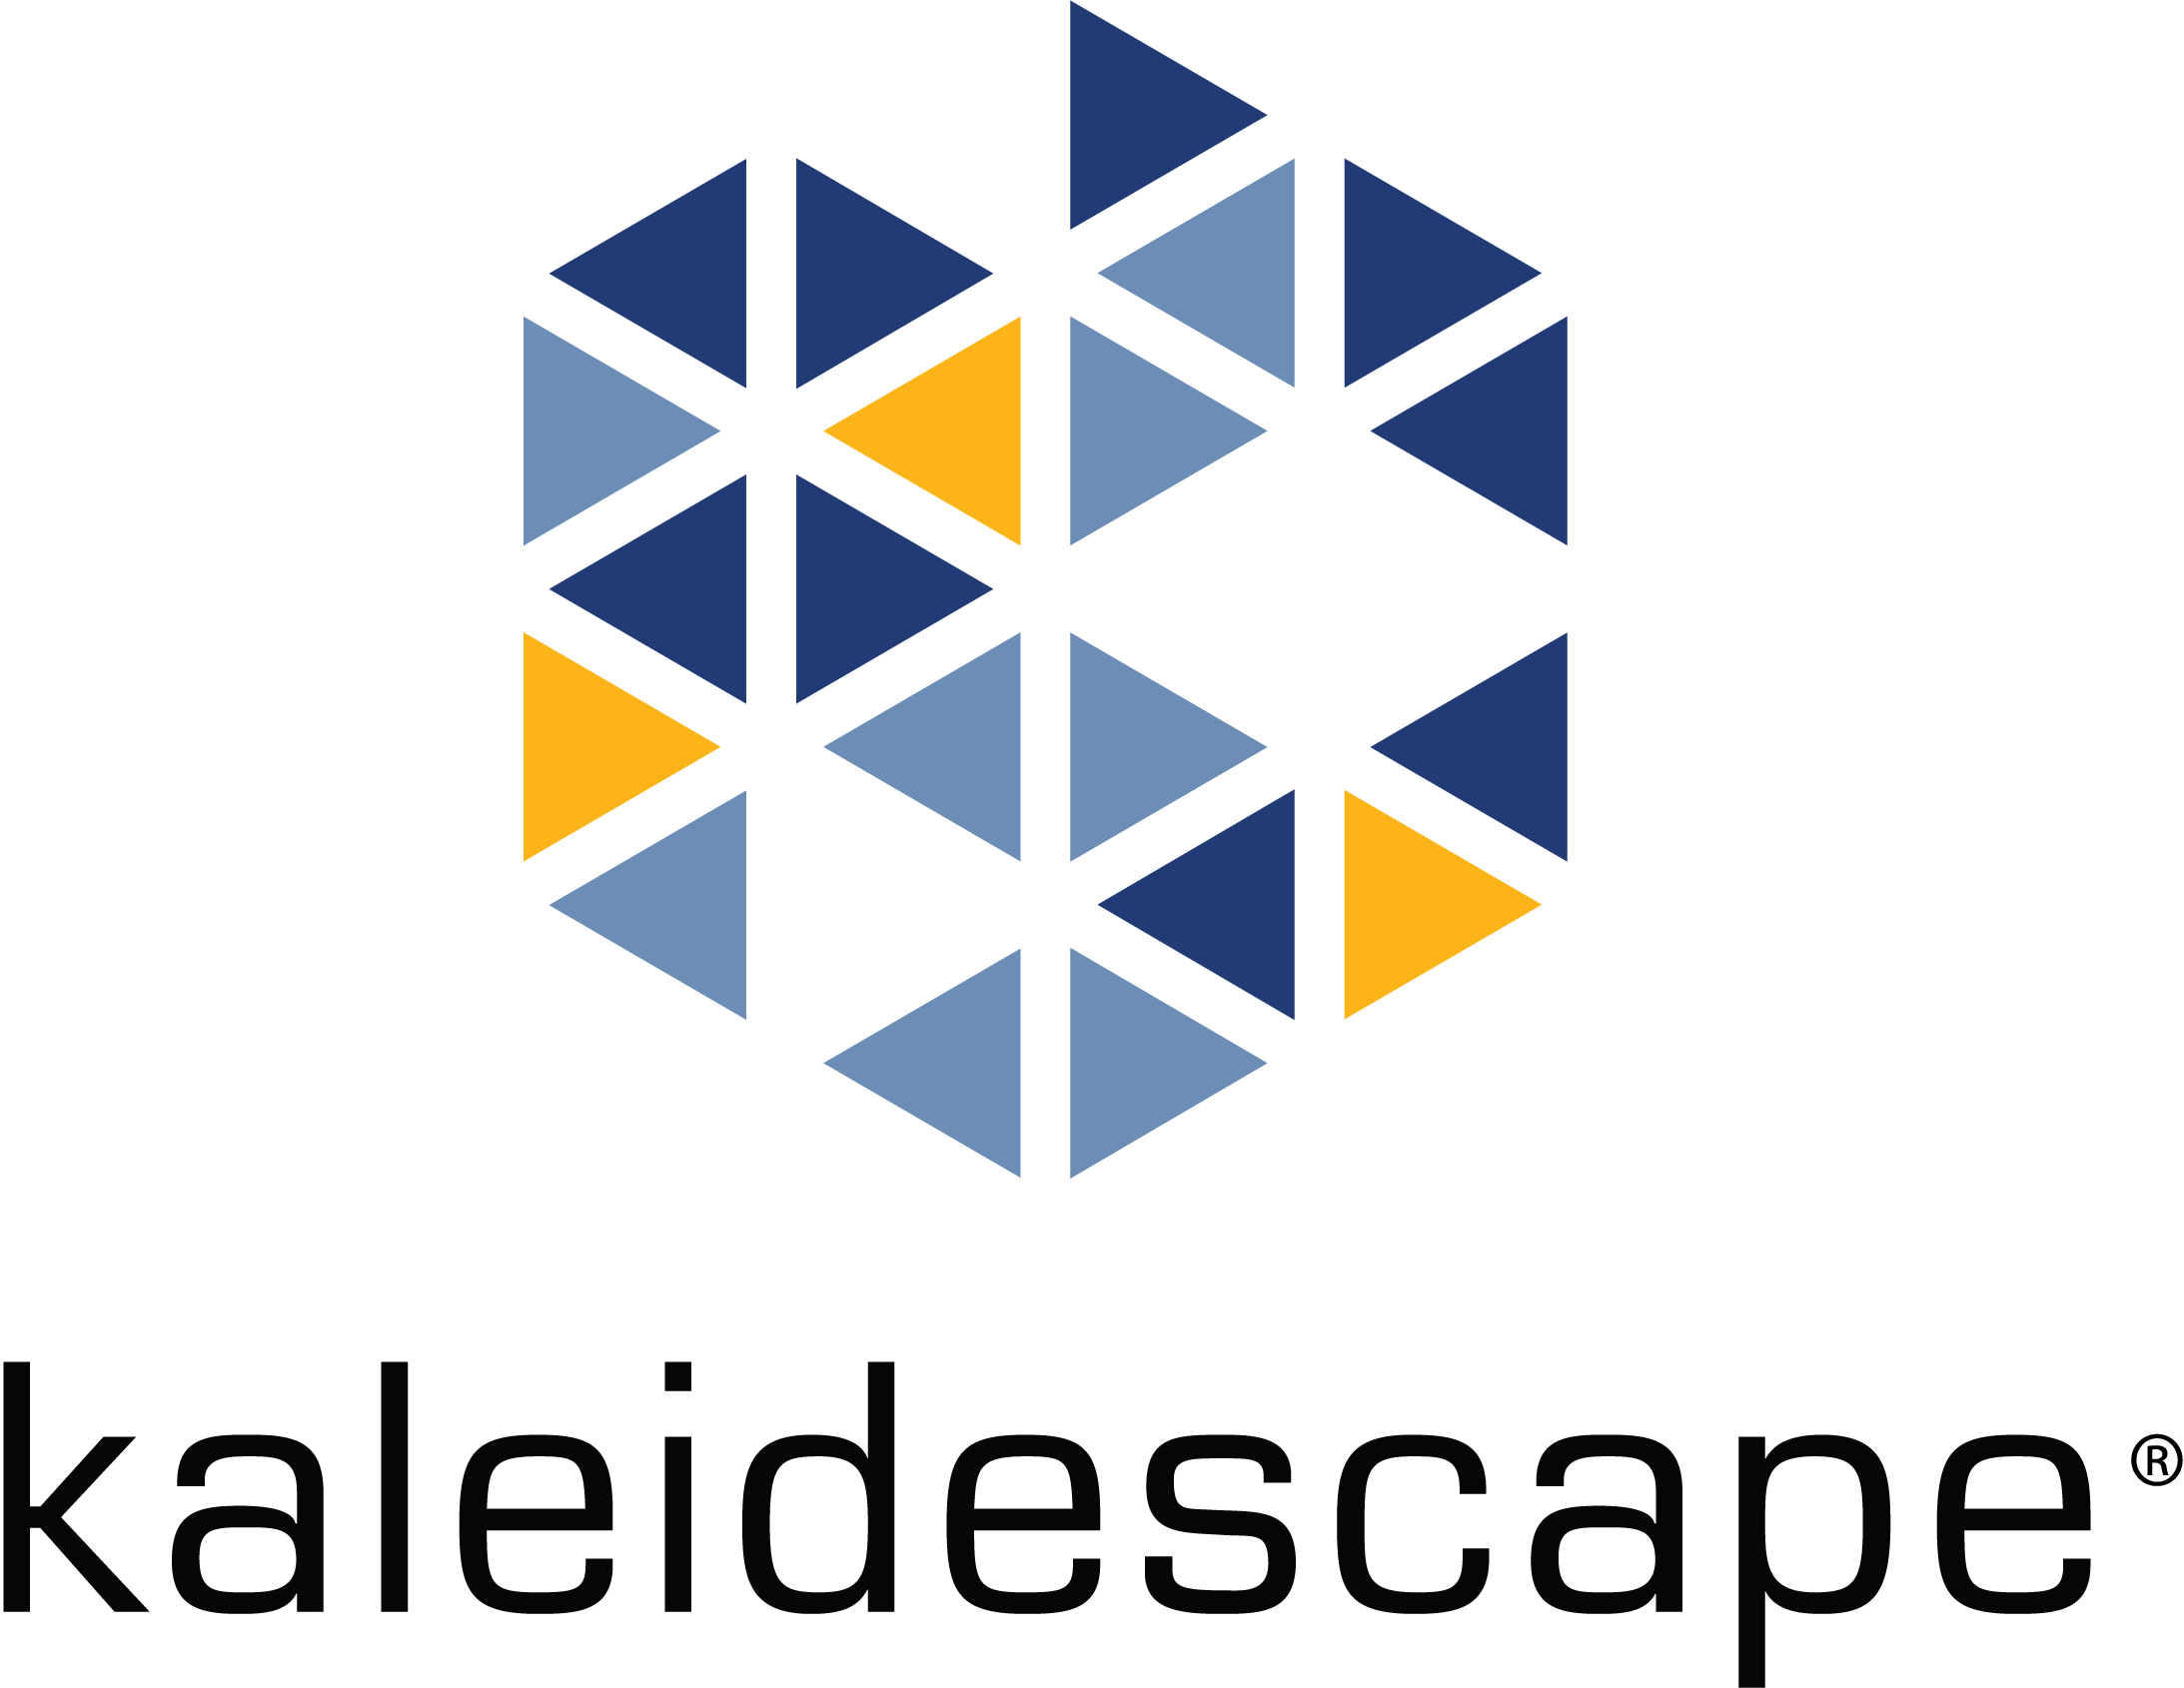 Kaleidscape